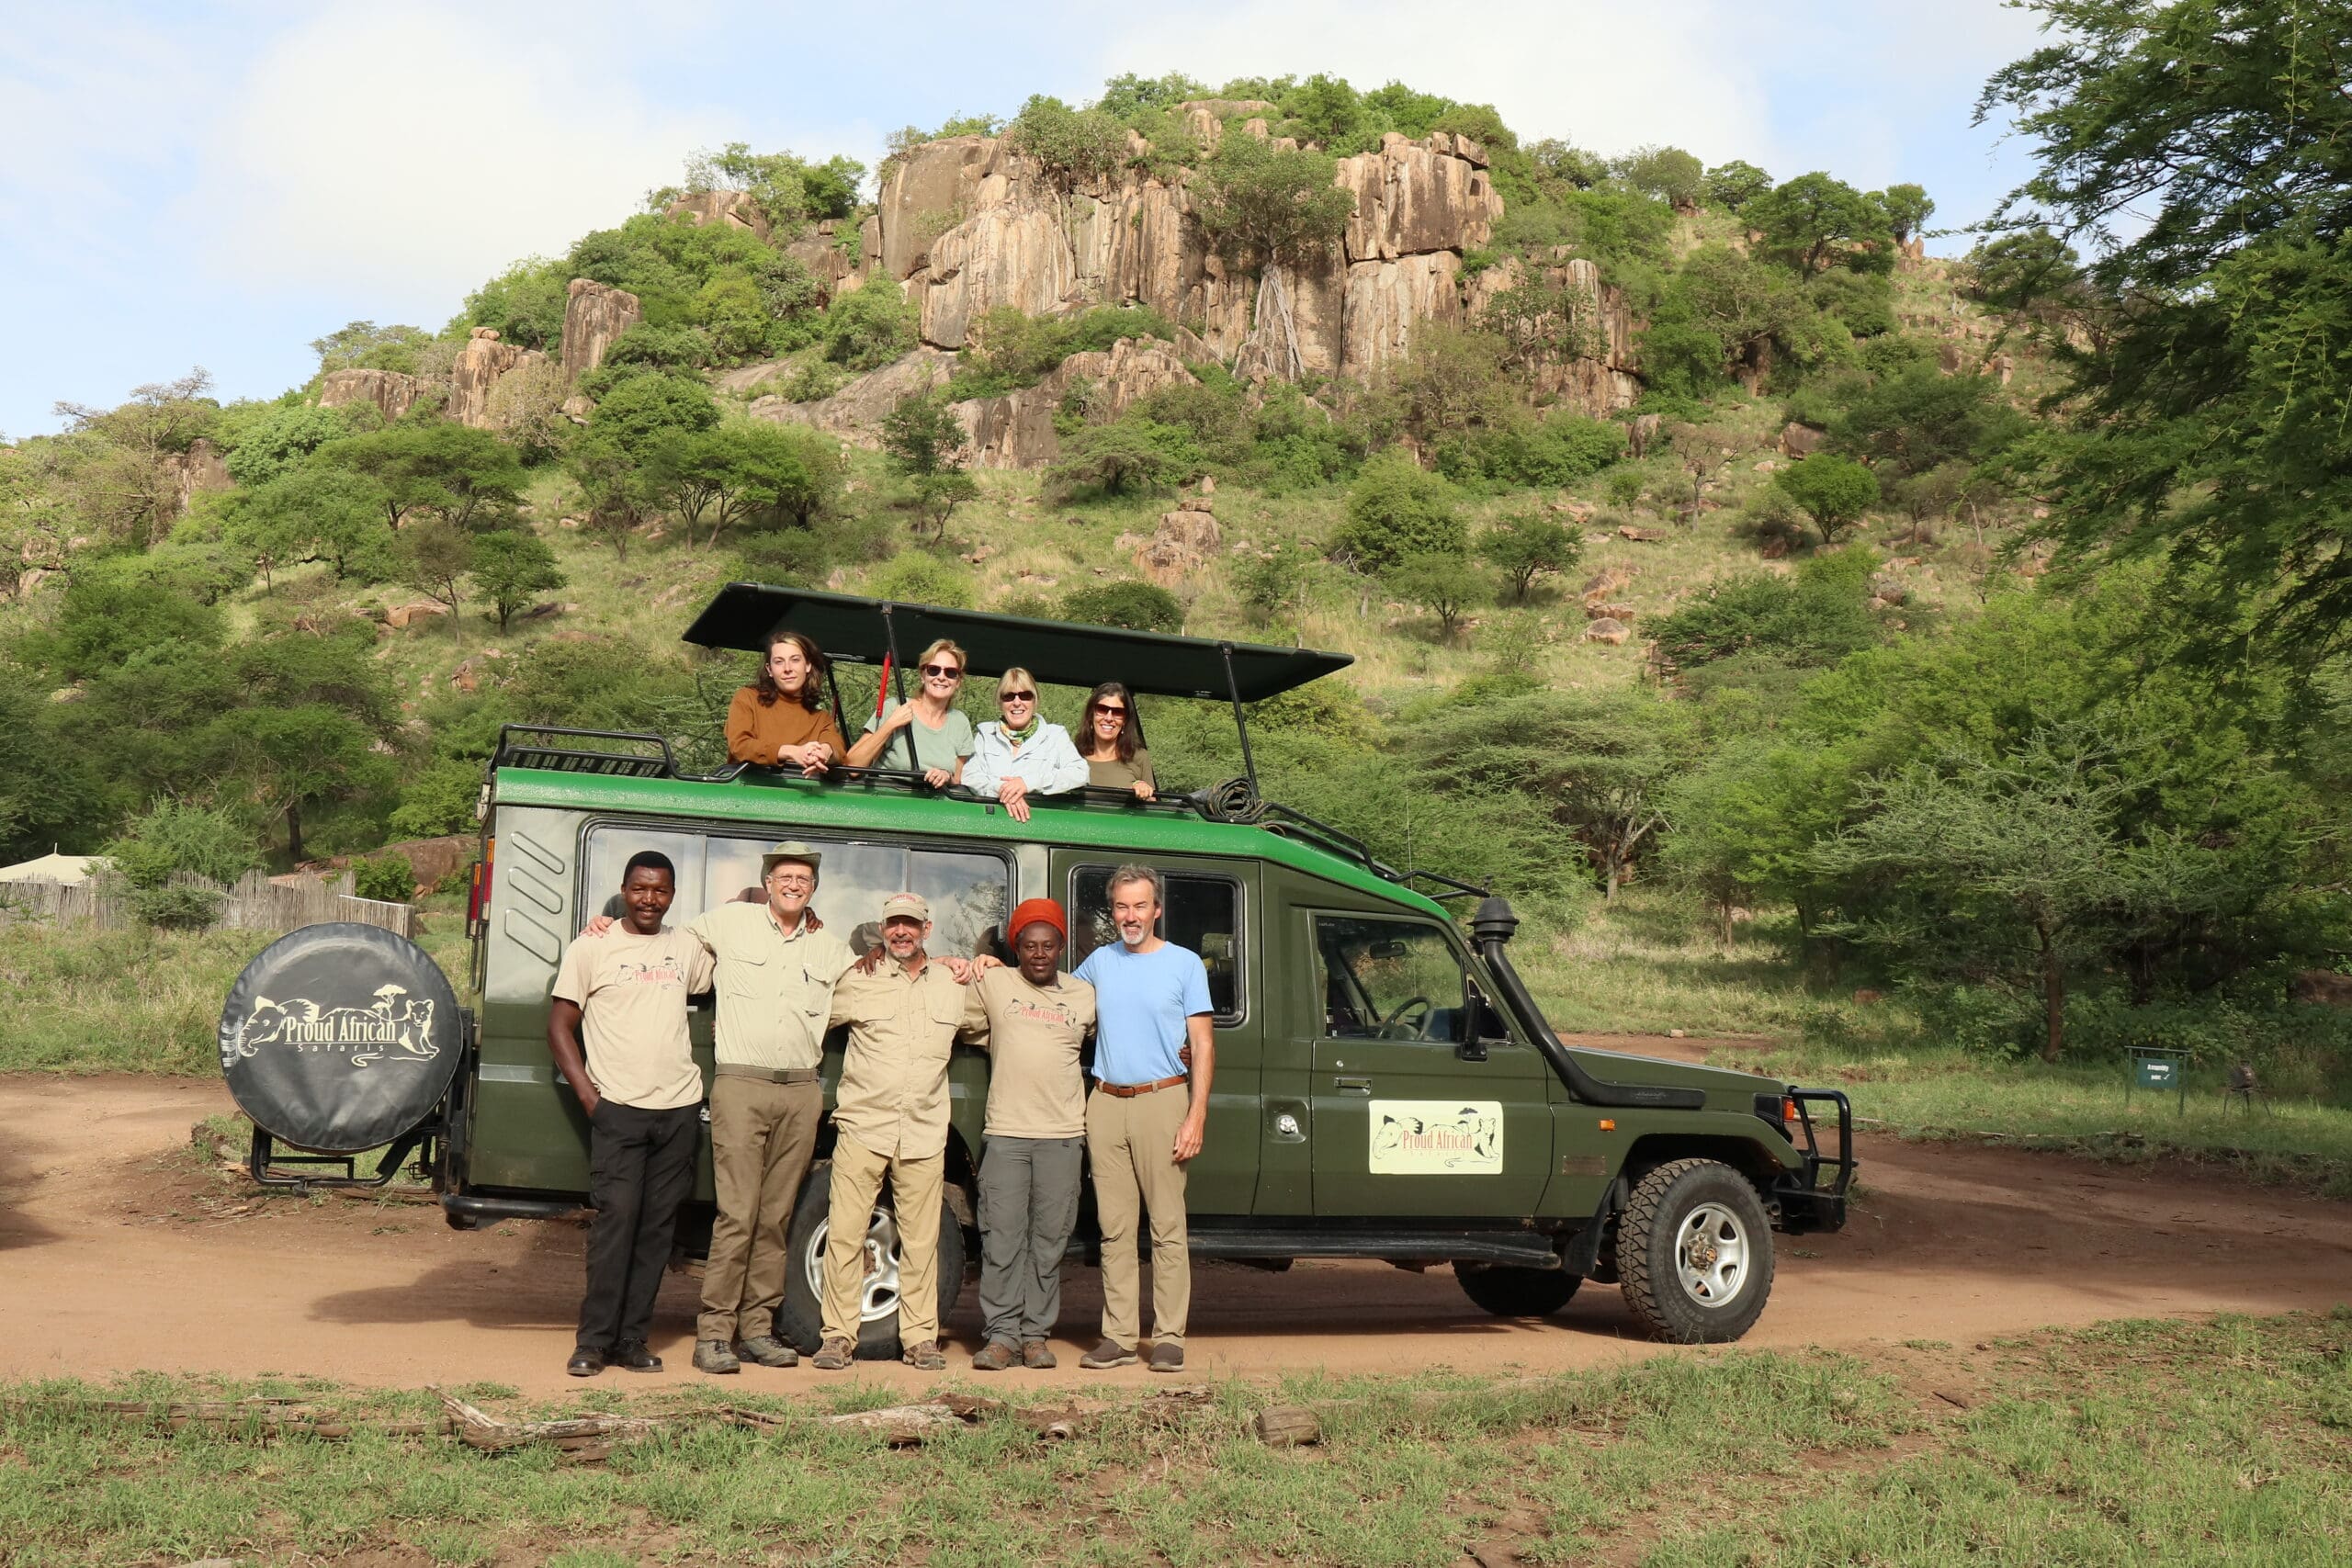 Proud African Safaris team